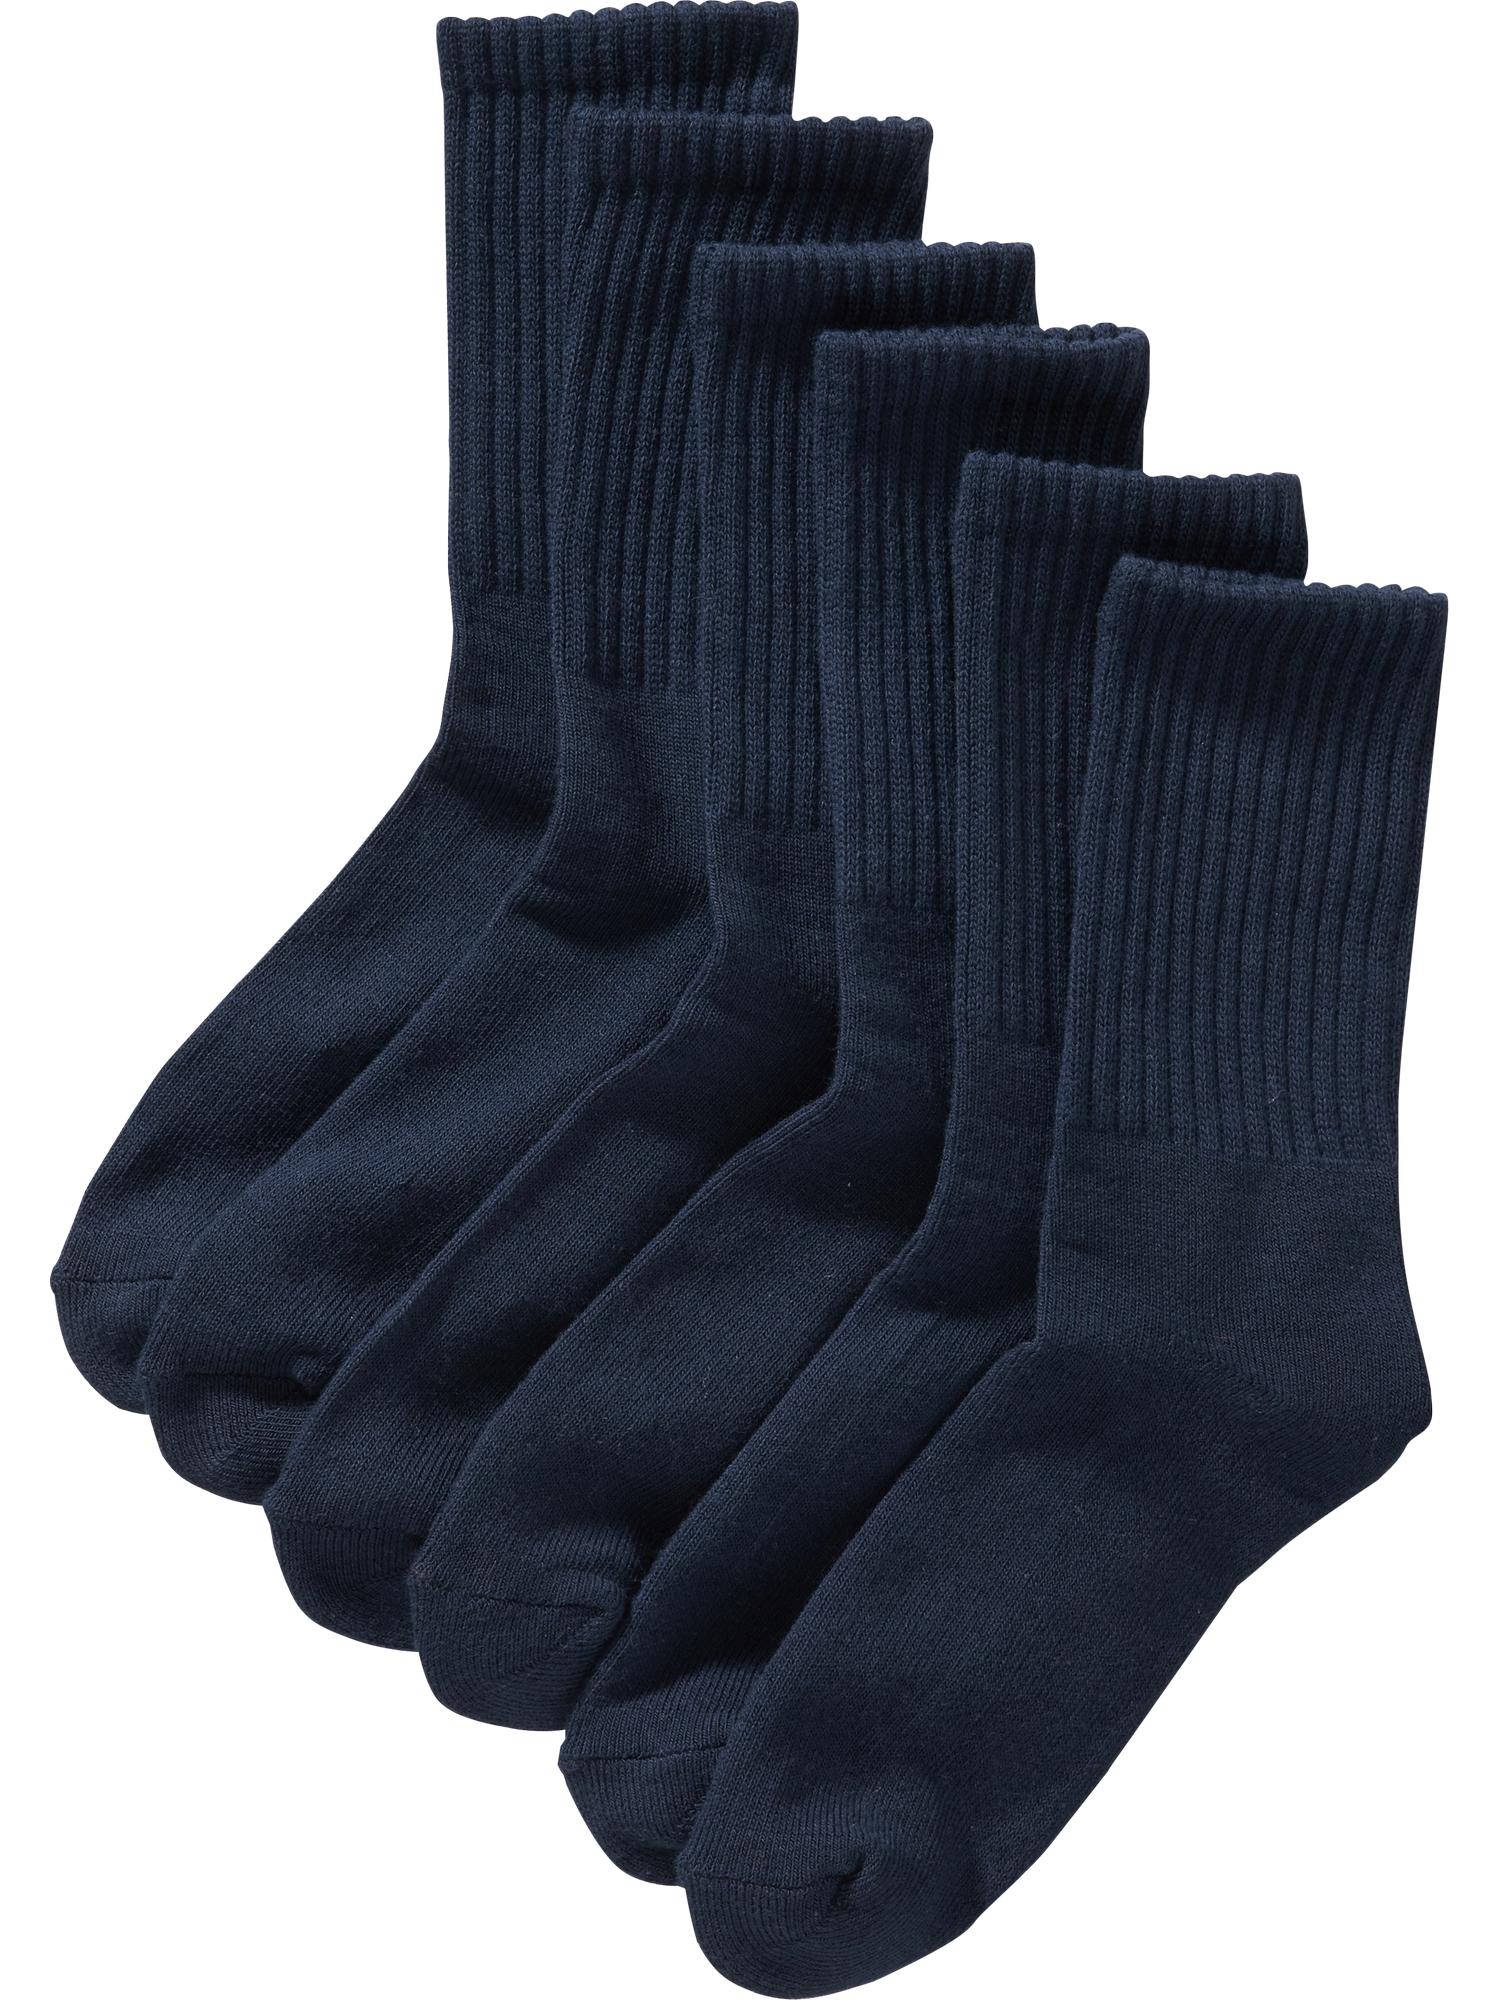 Boys Uniform Crew Sock 3-Packs | Old Navy